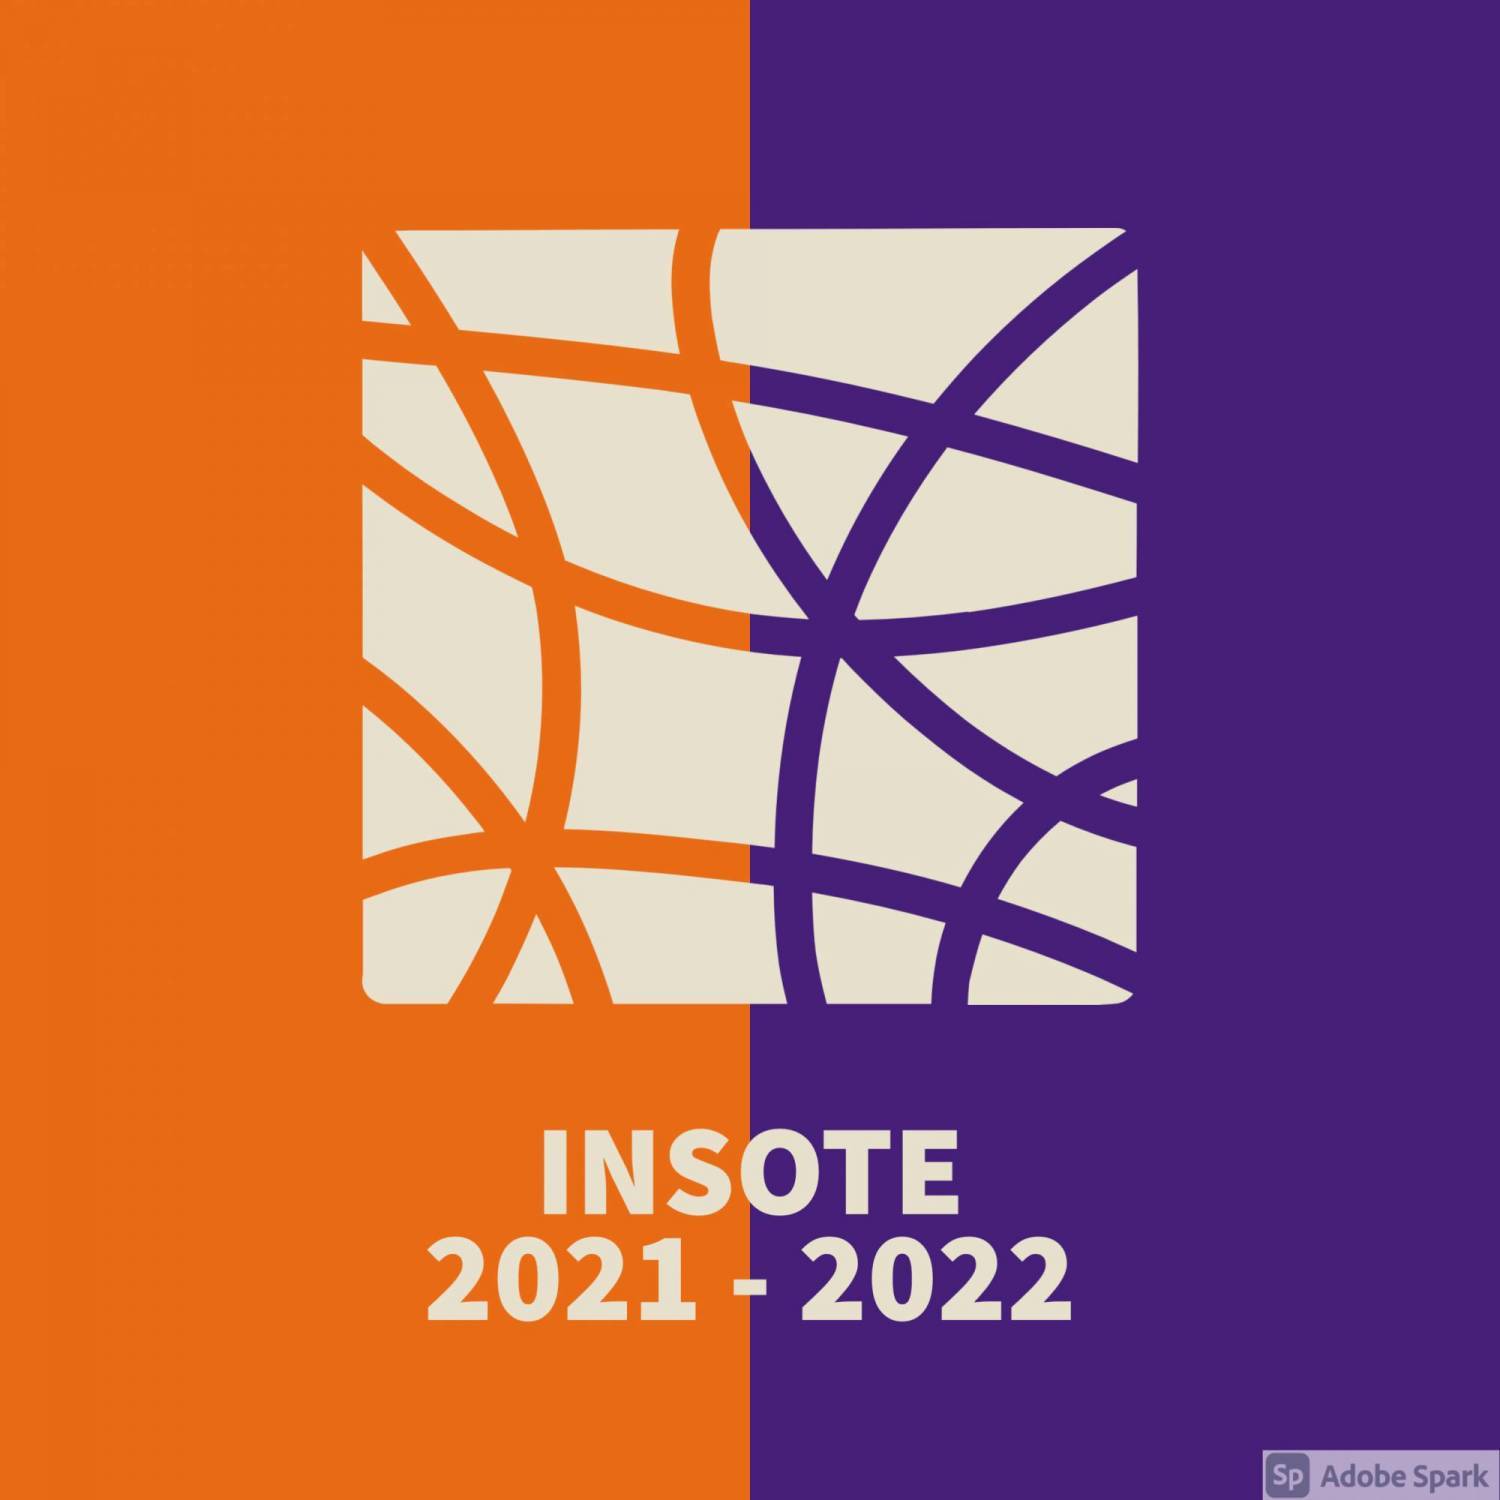 INSOTE logo